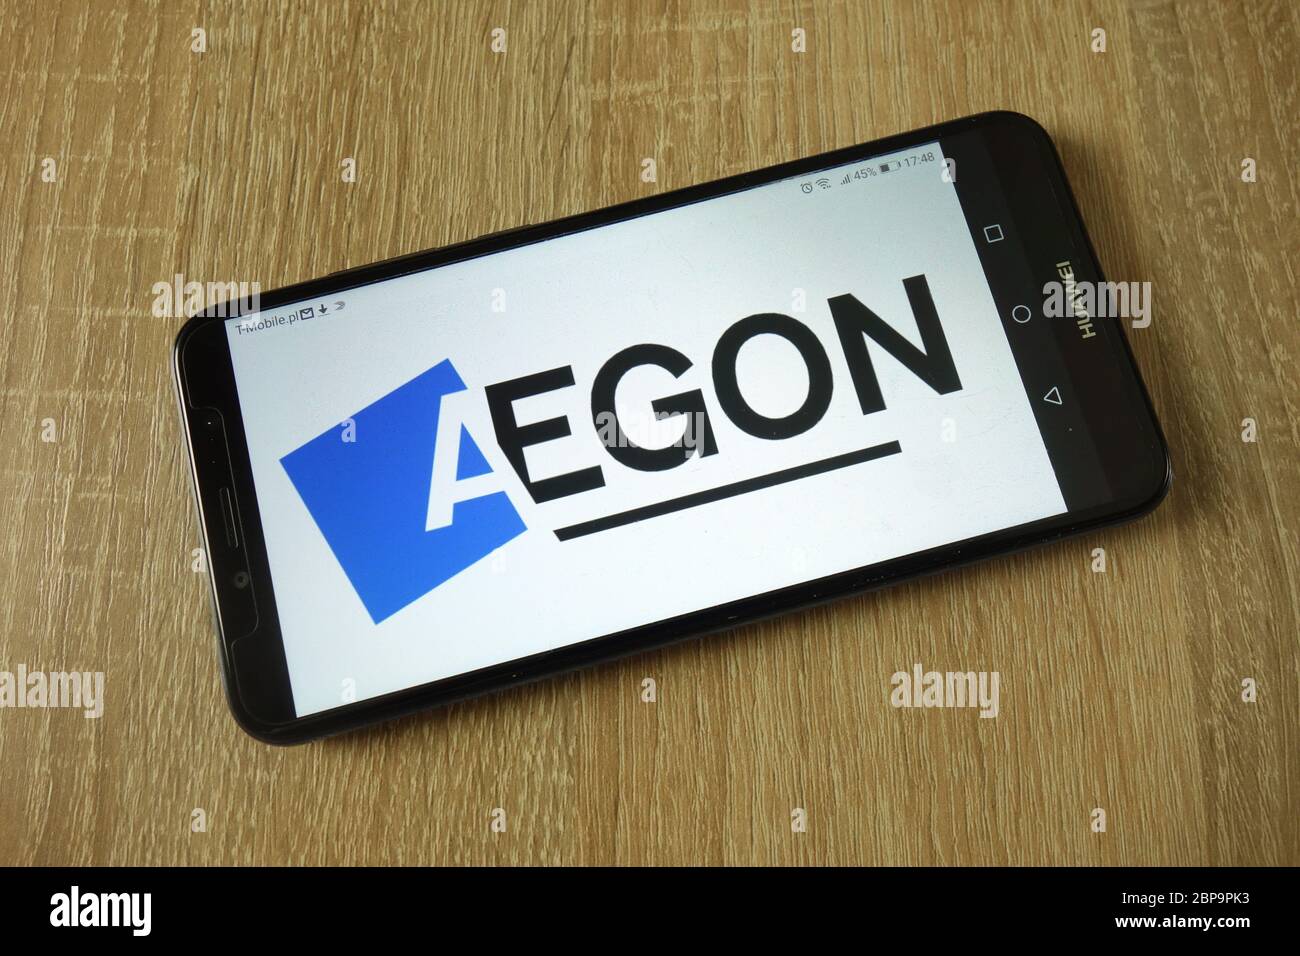 Aegon N.V. company logo displayed on smartphone Stock Photo